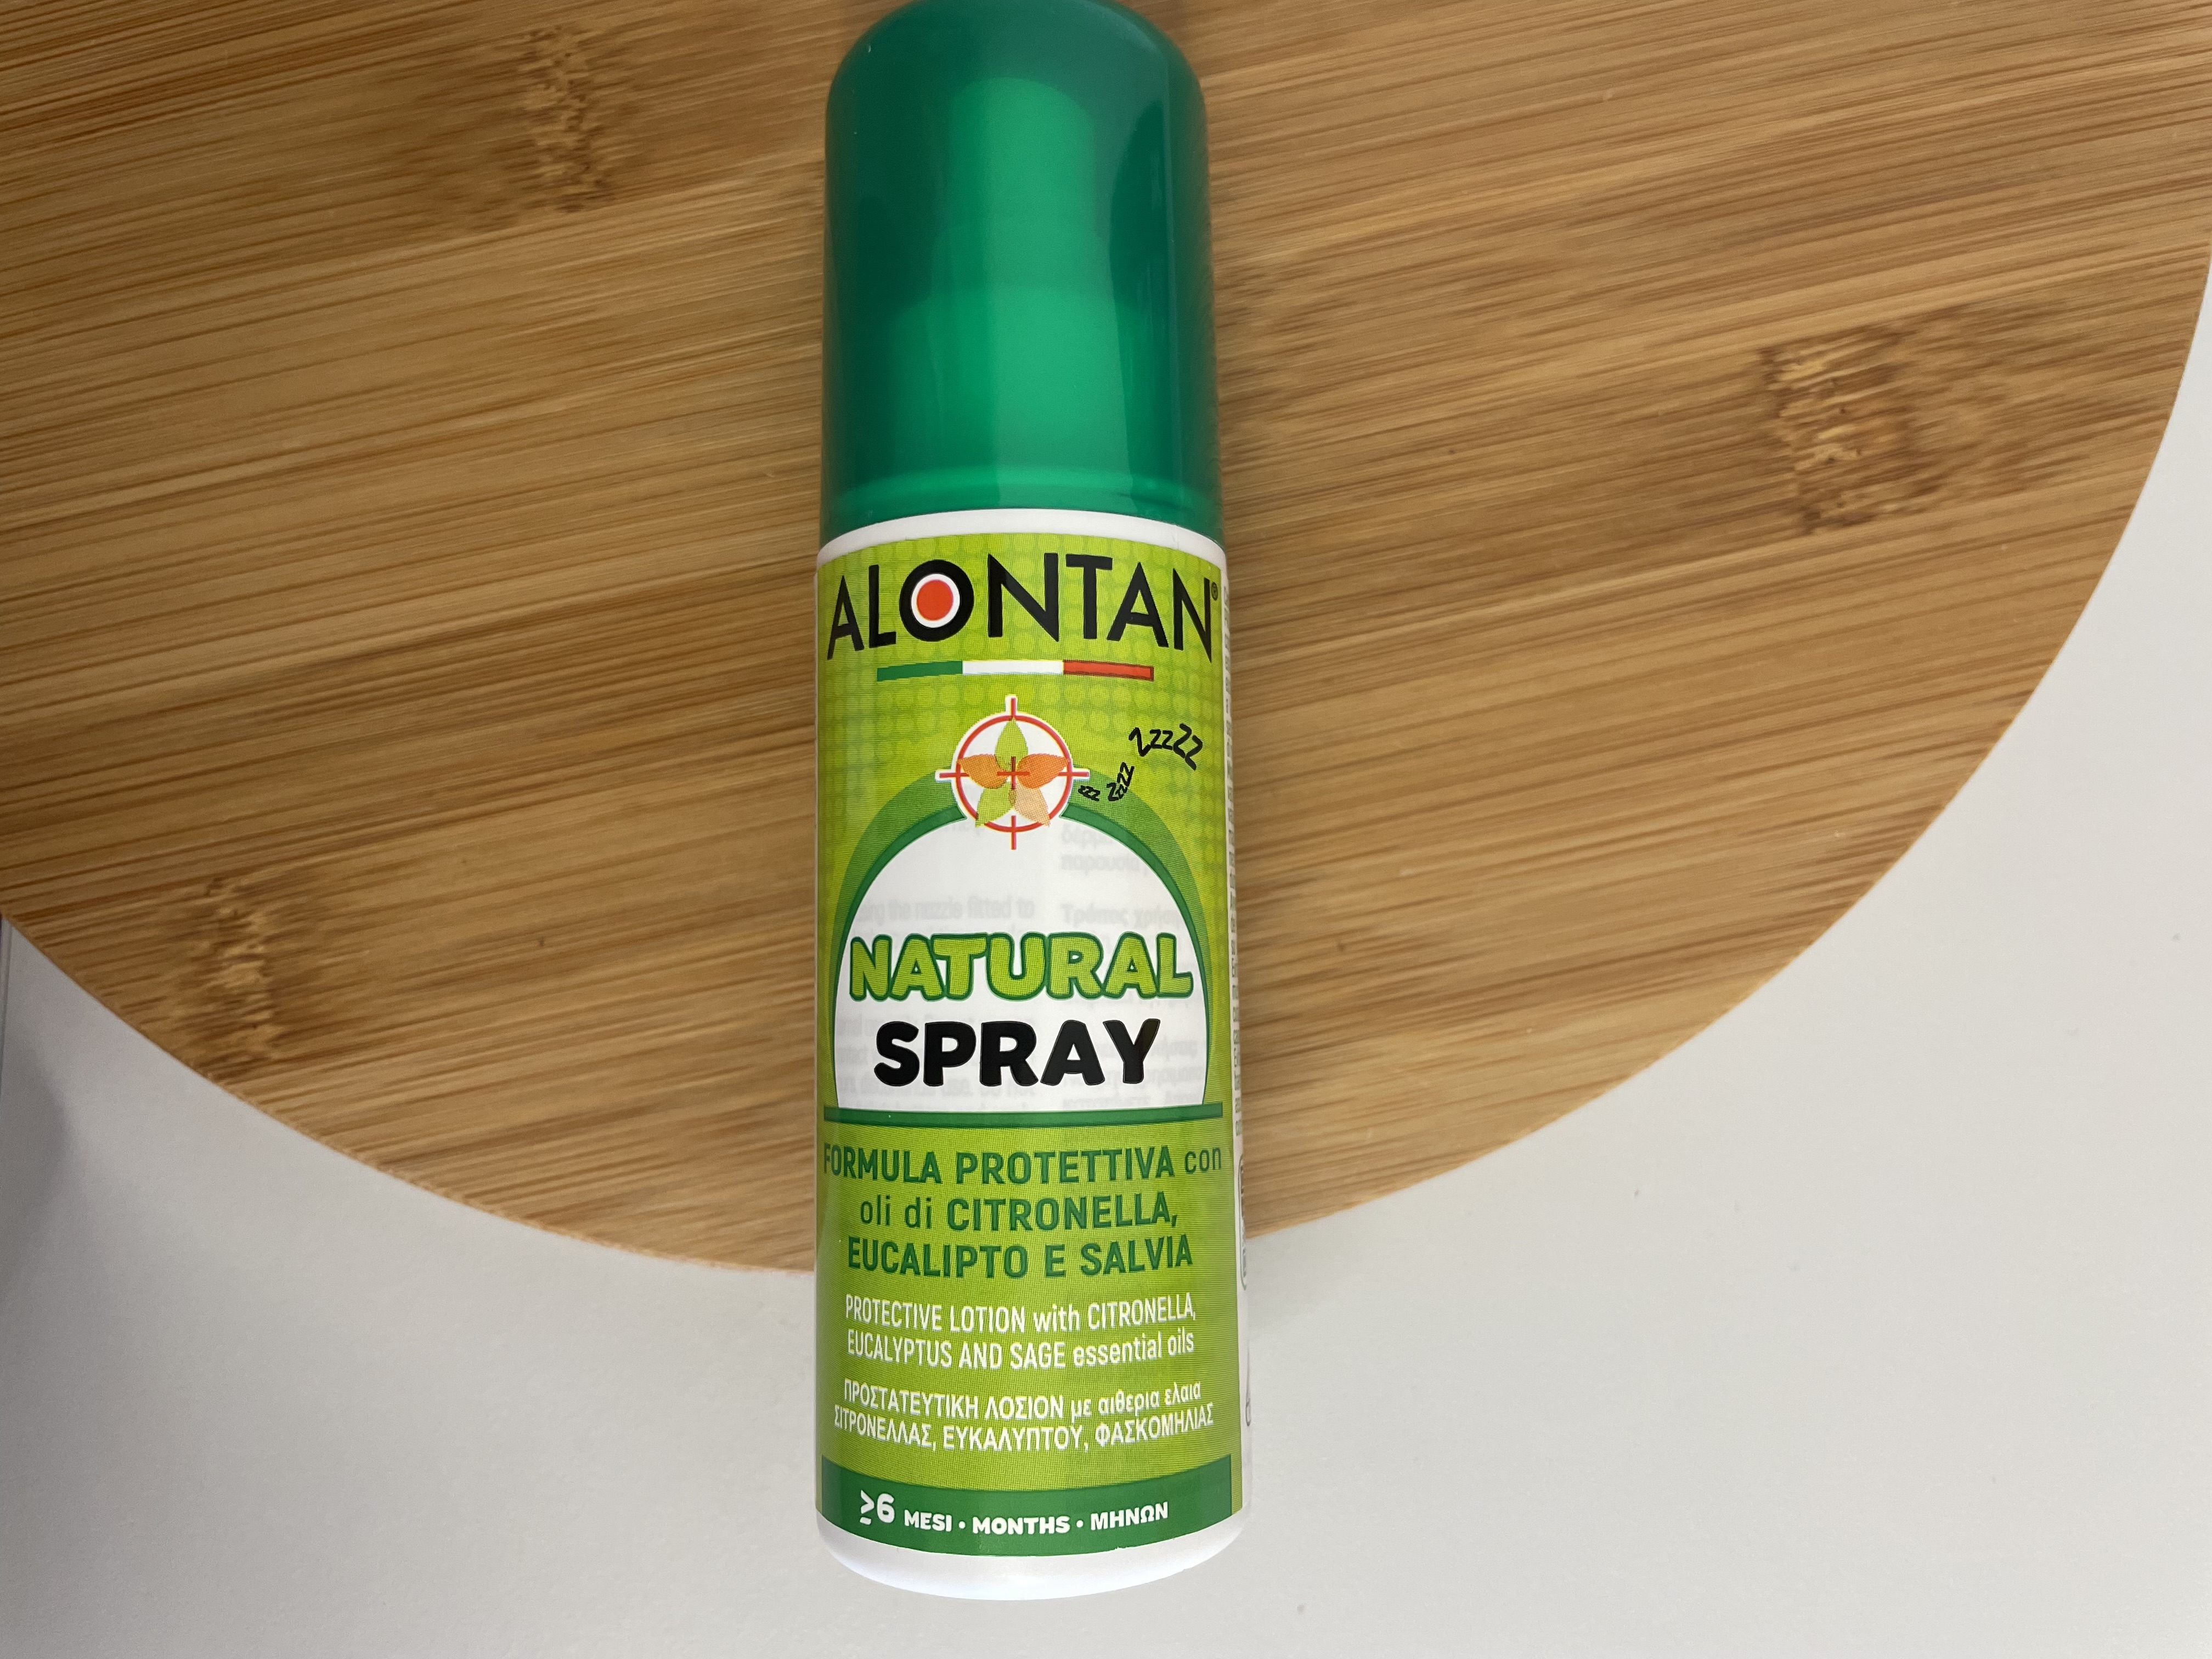 Alontan: Natural Spray